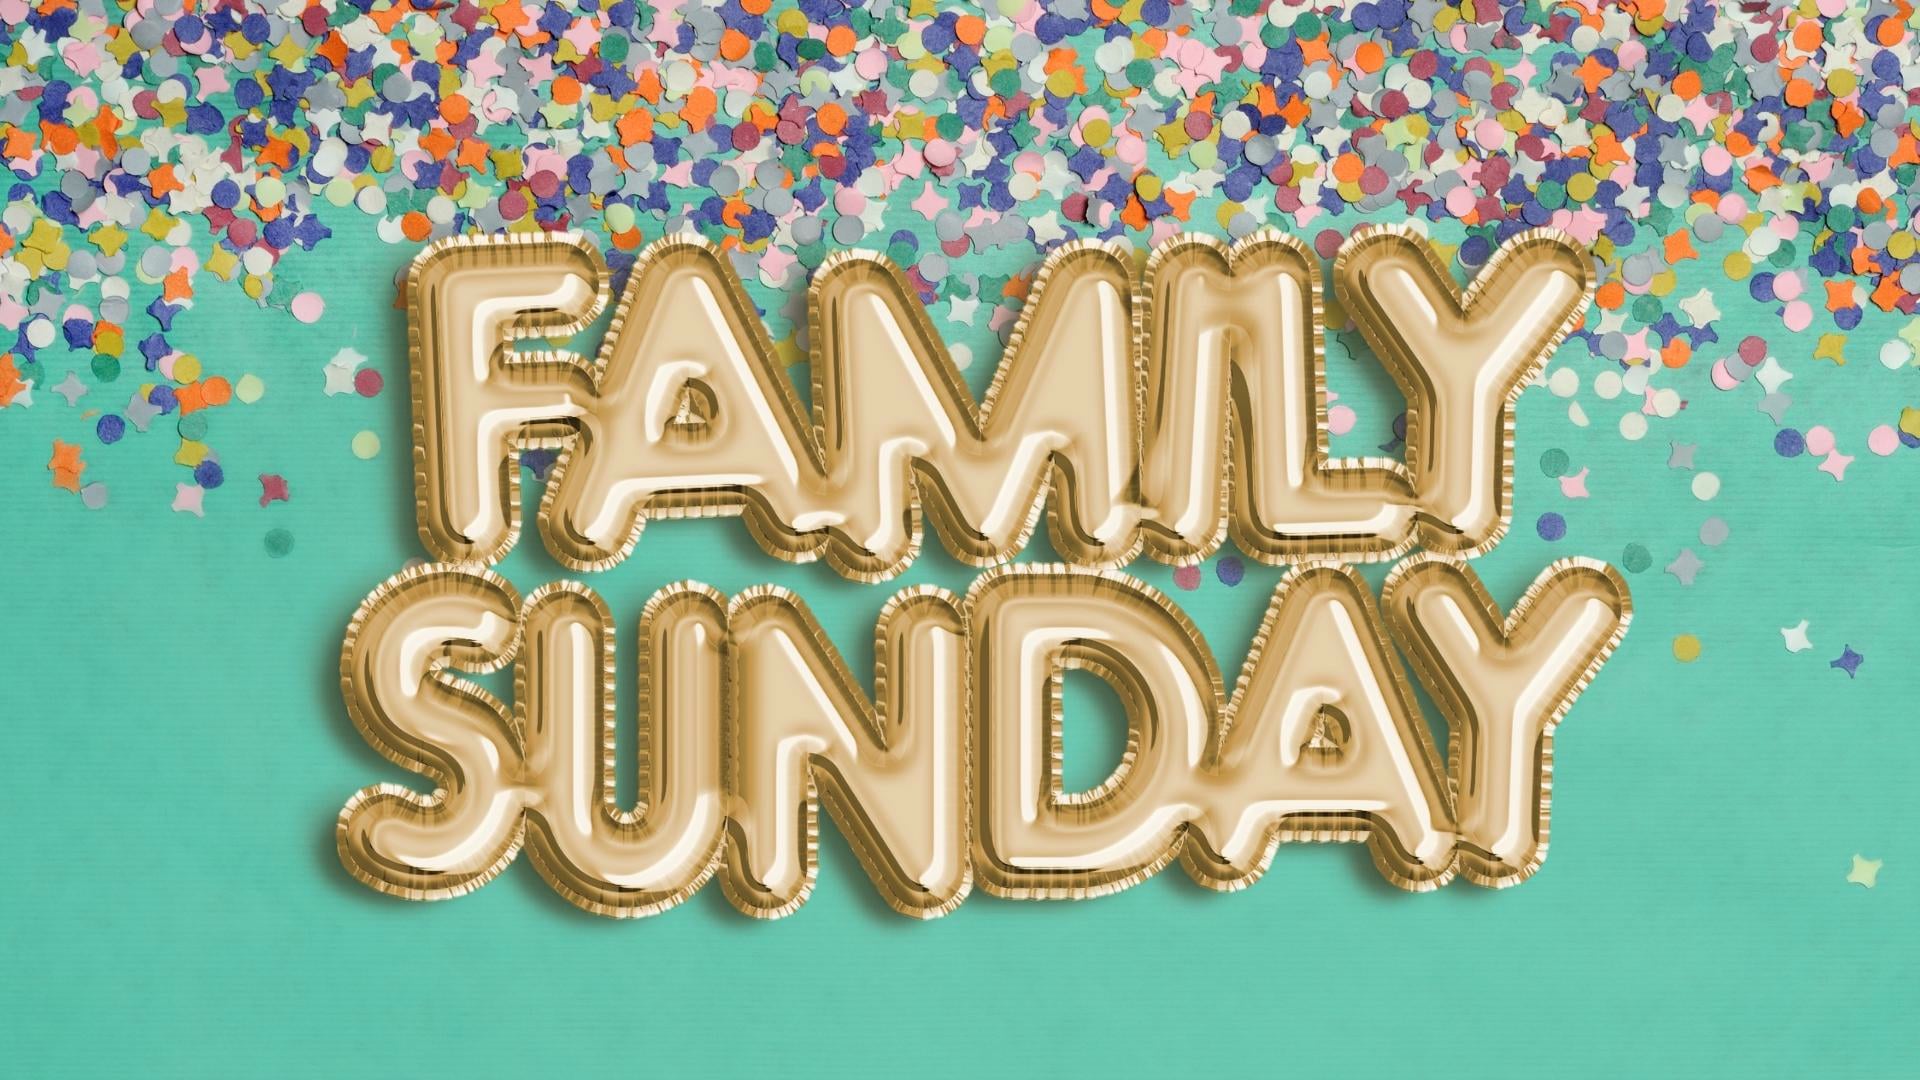 Family Sunday - July 31, 2022